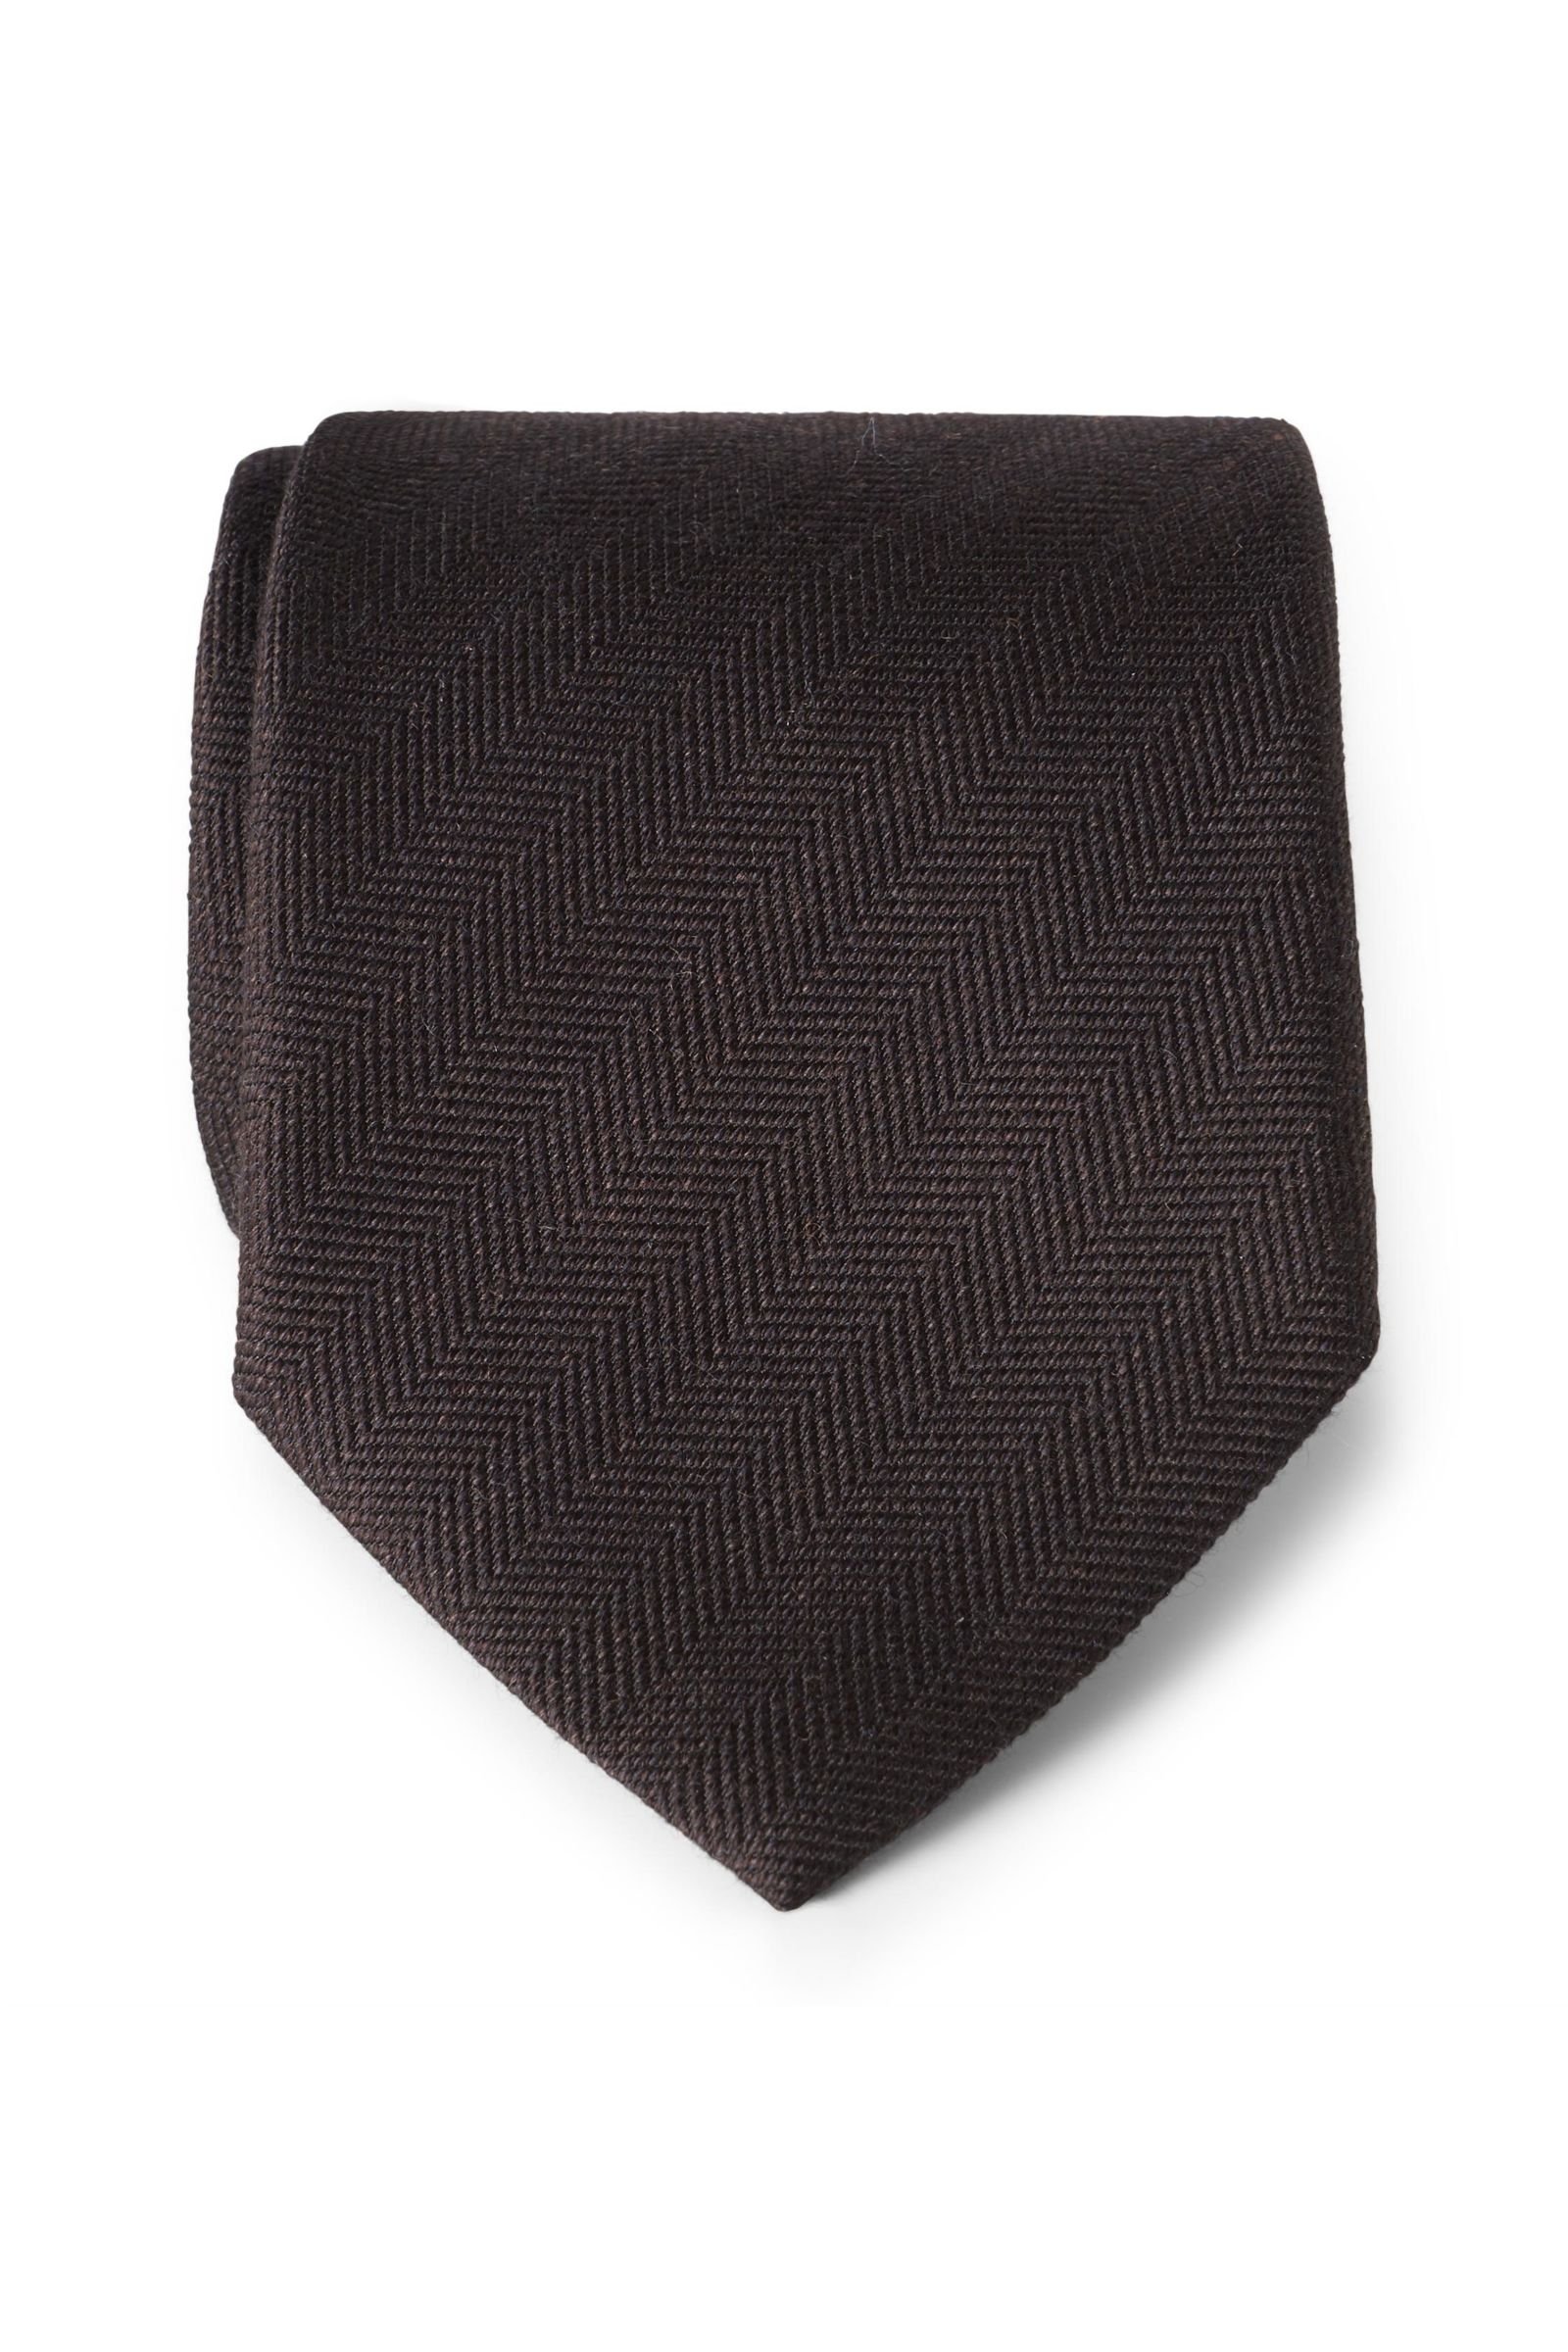 Krawatte dunkelbraun gemustert